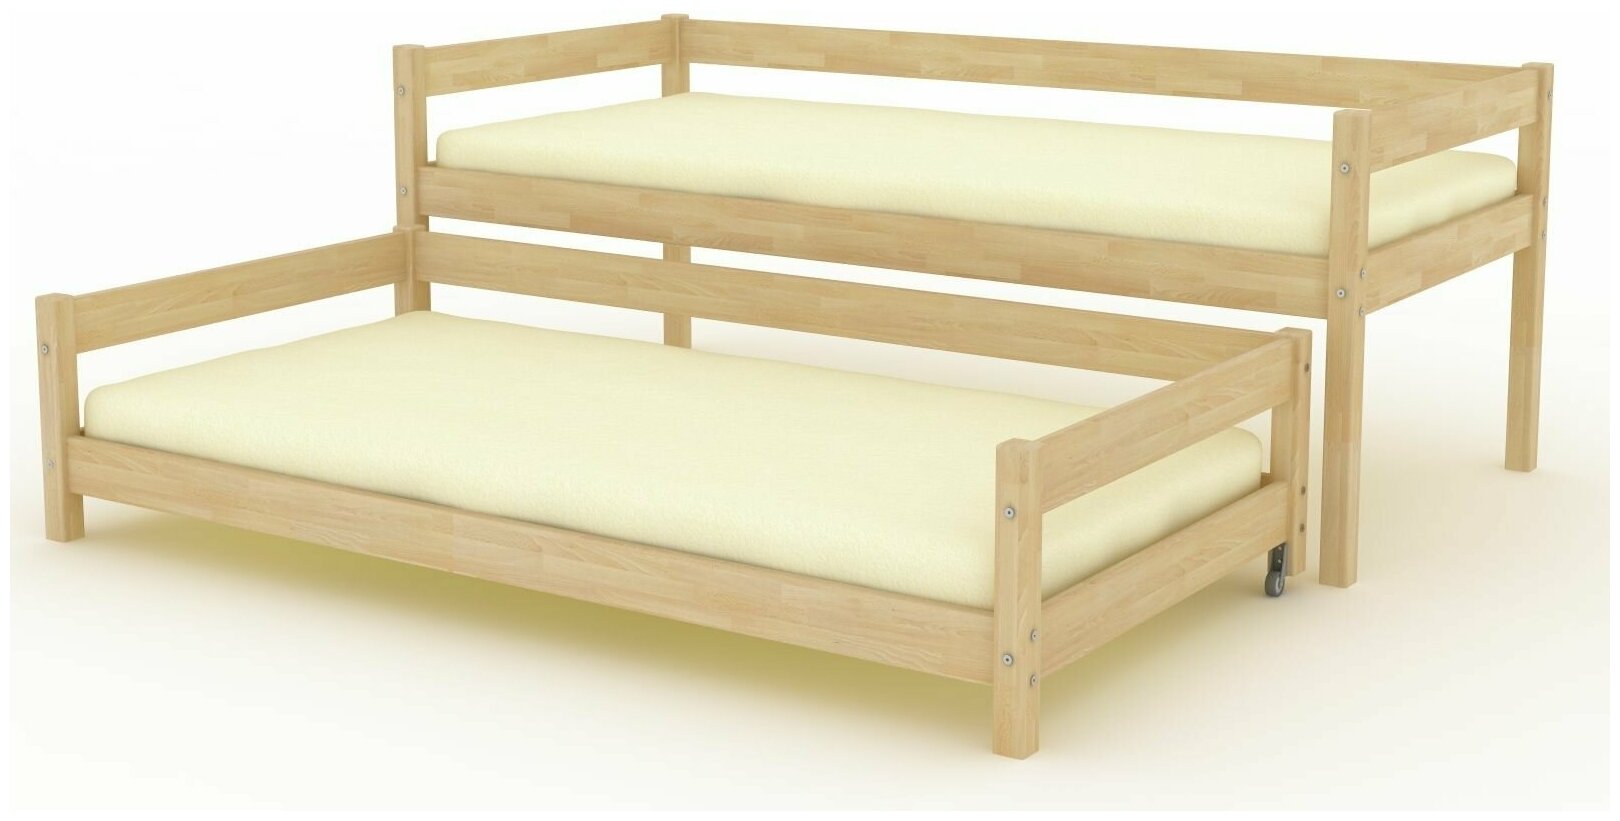 Двухъярусная-выкатная кровать "Берёзка 13" без покрытия, 80x200 см, ORTMEX